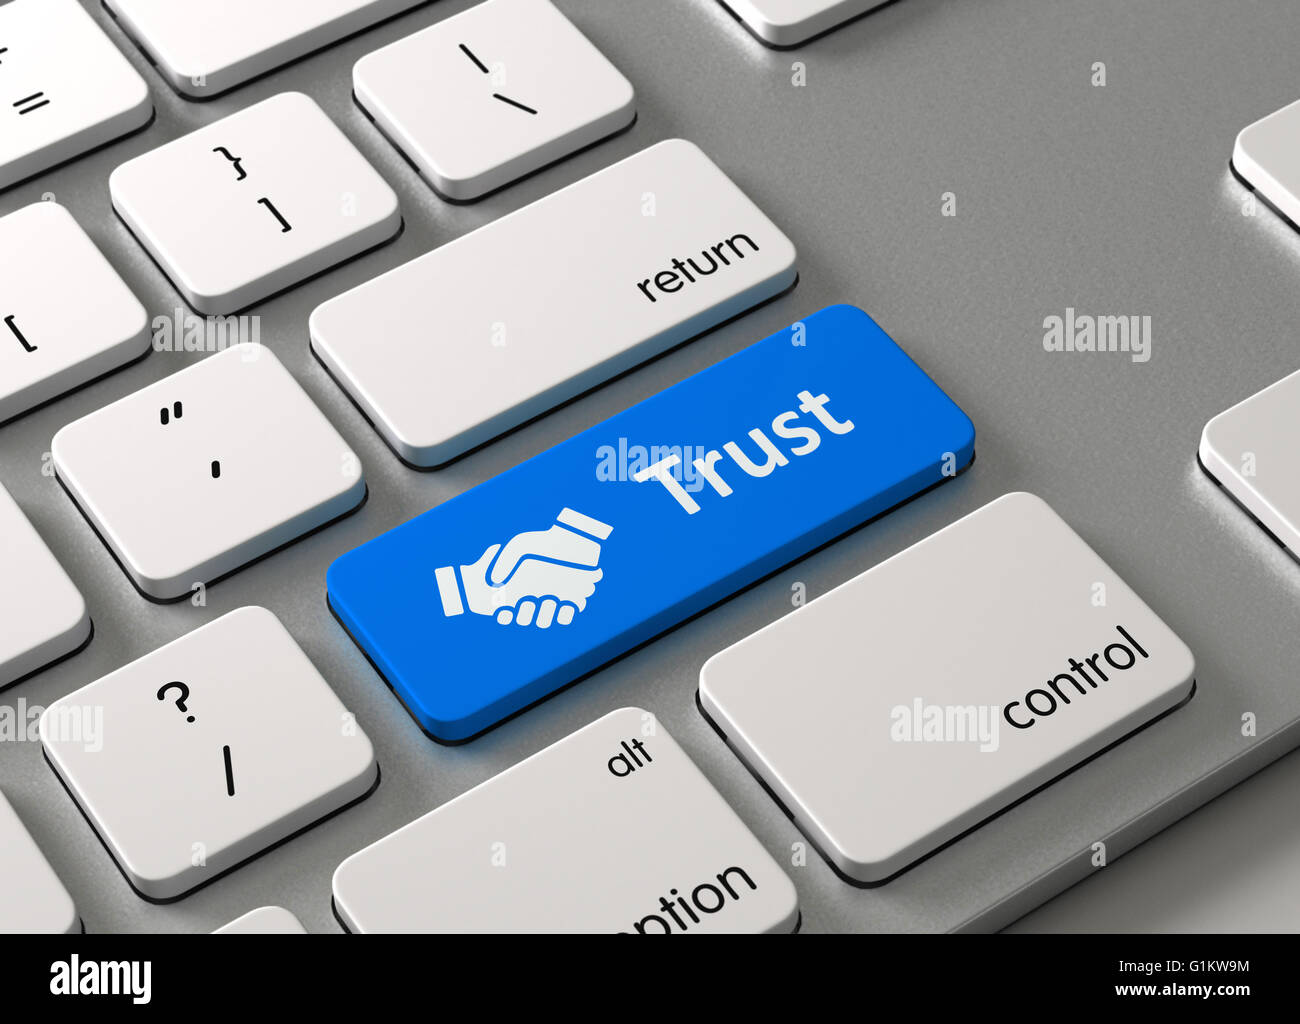 Un teclado con un botón azul confianza Foto de stock